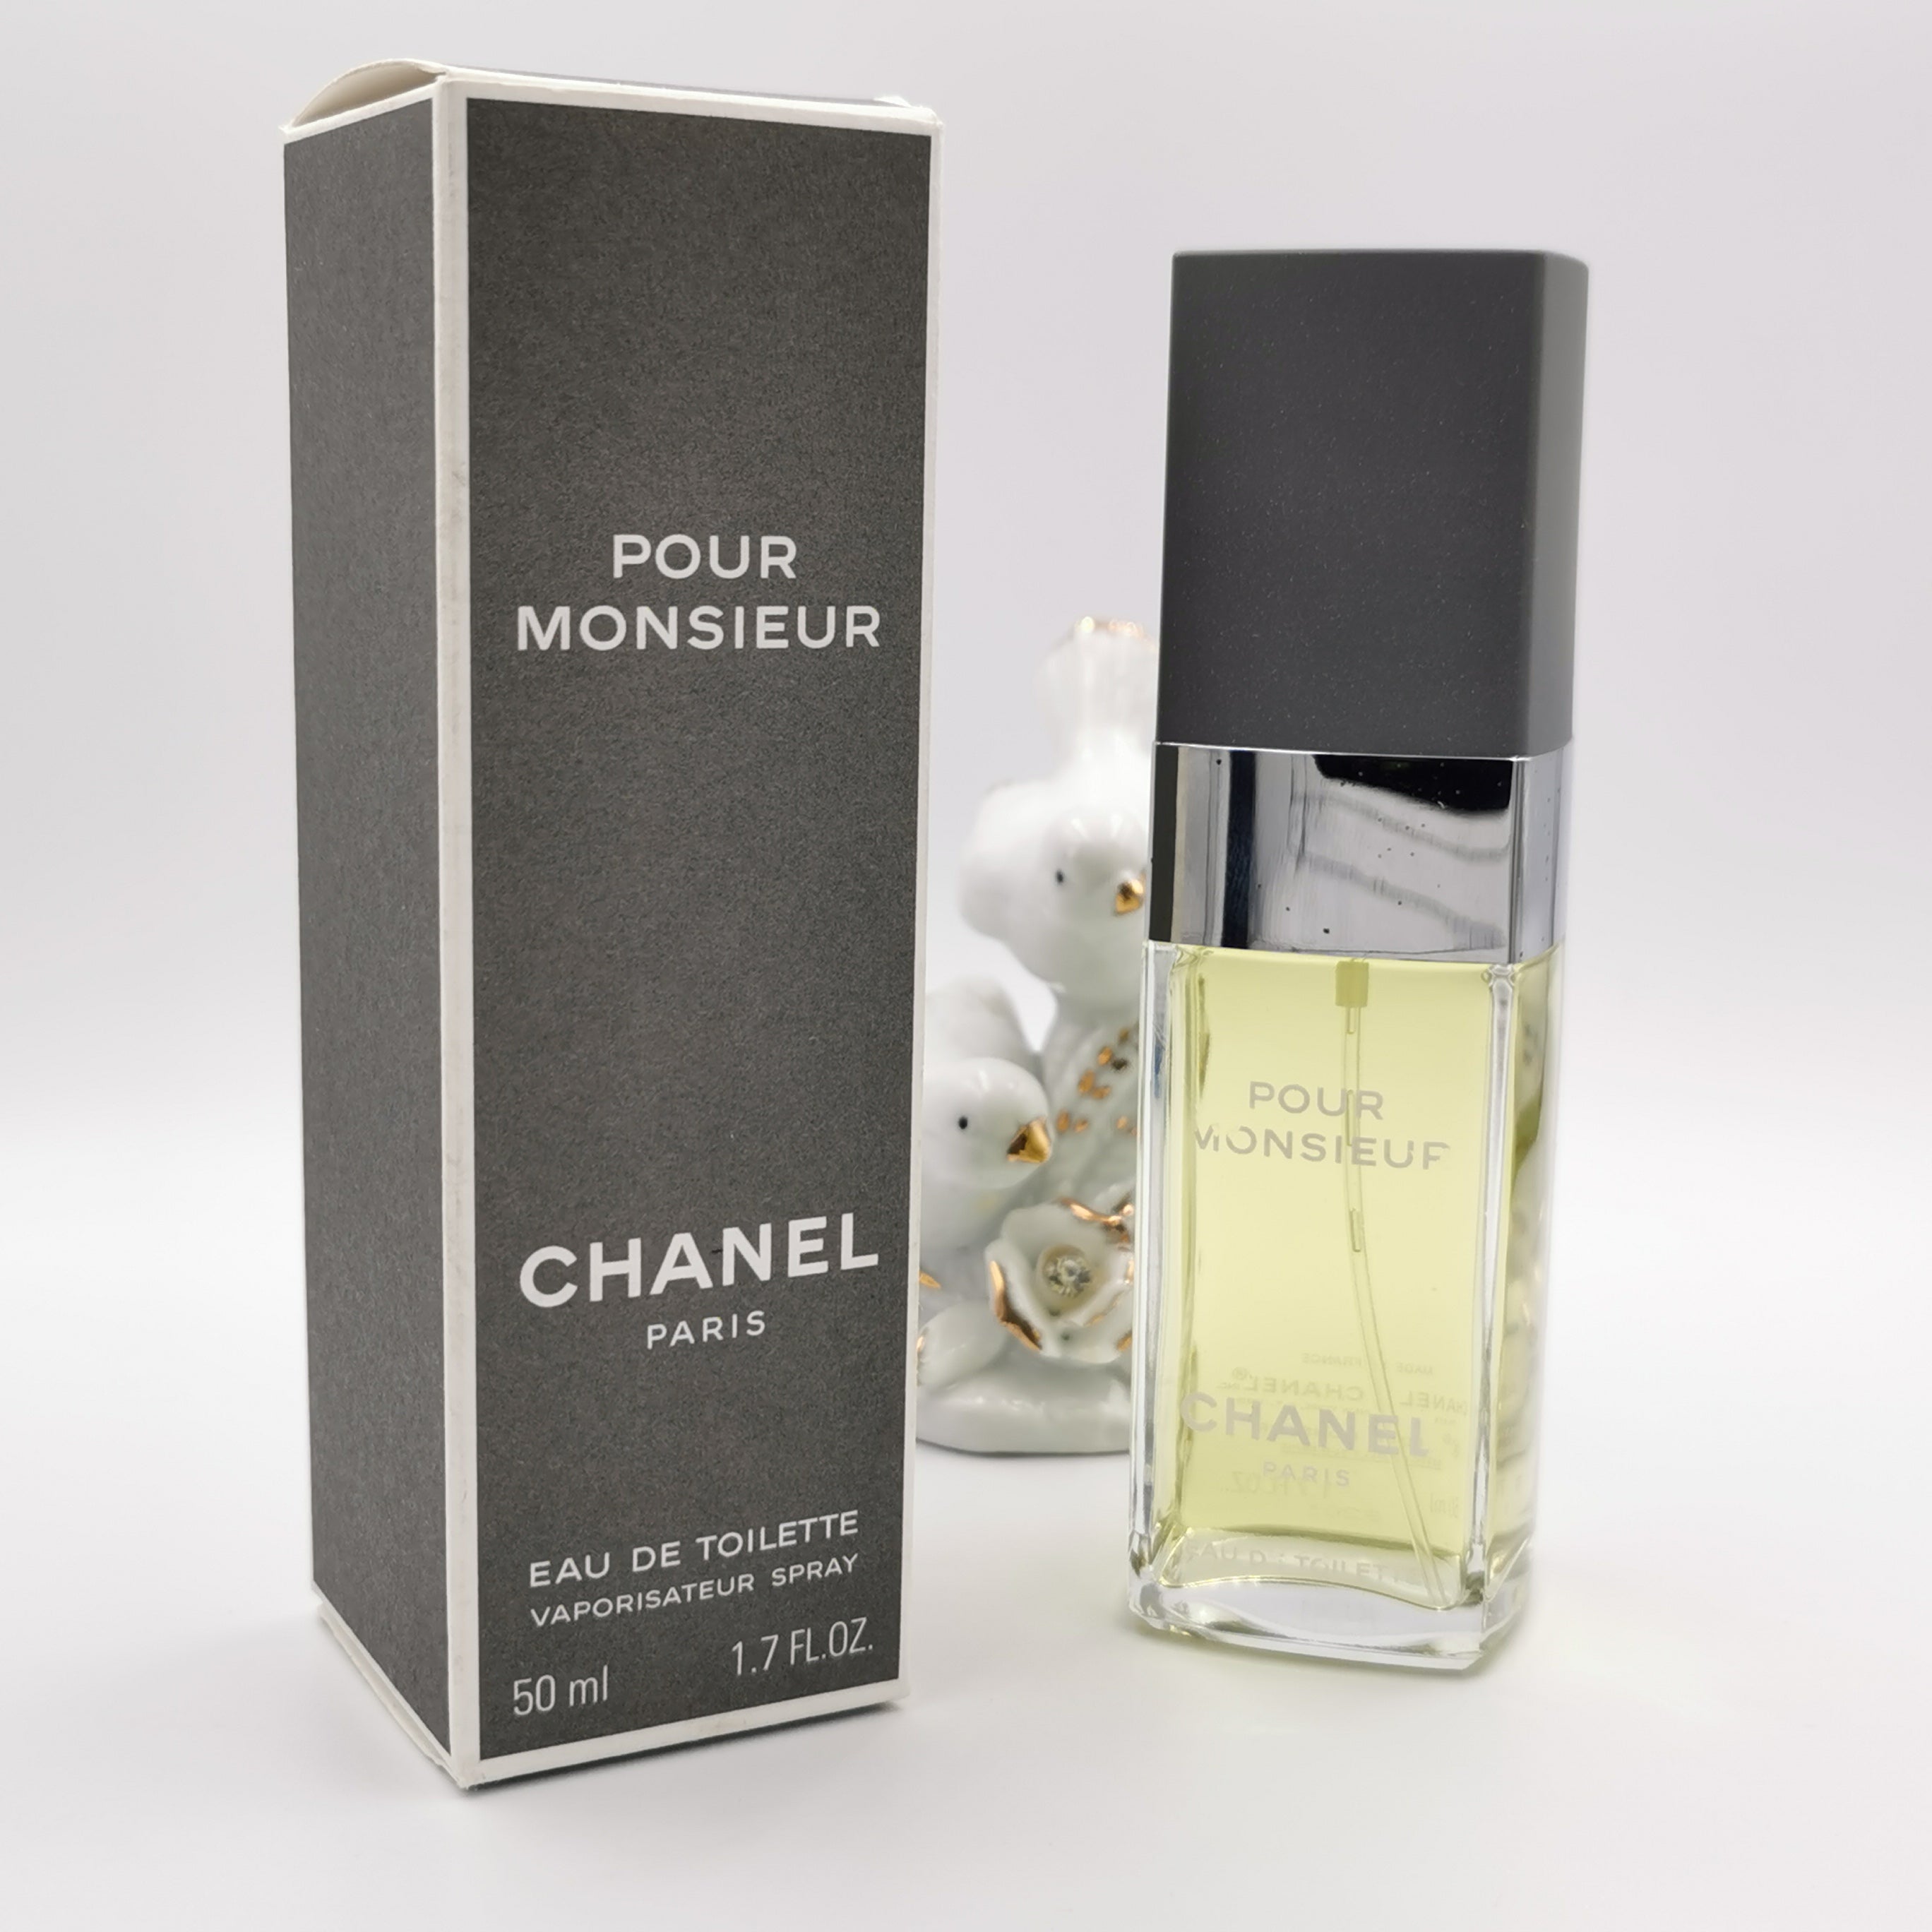 Chanel Perfume Bottles: Chanel Pour Monsieur - A Gentleman's Cologne c1955